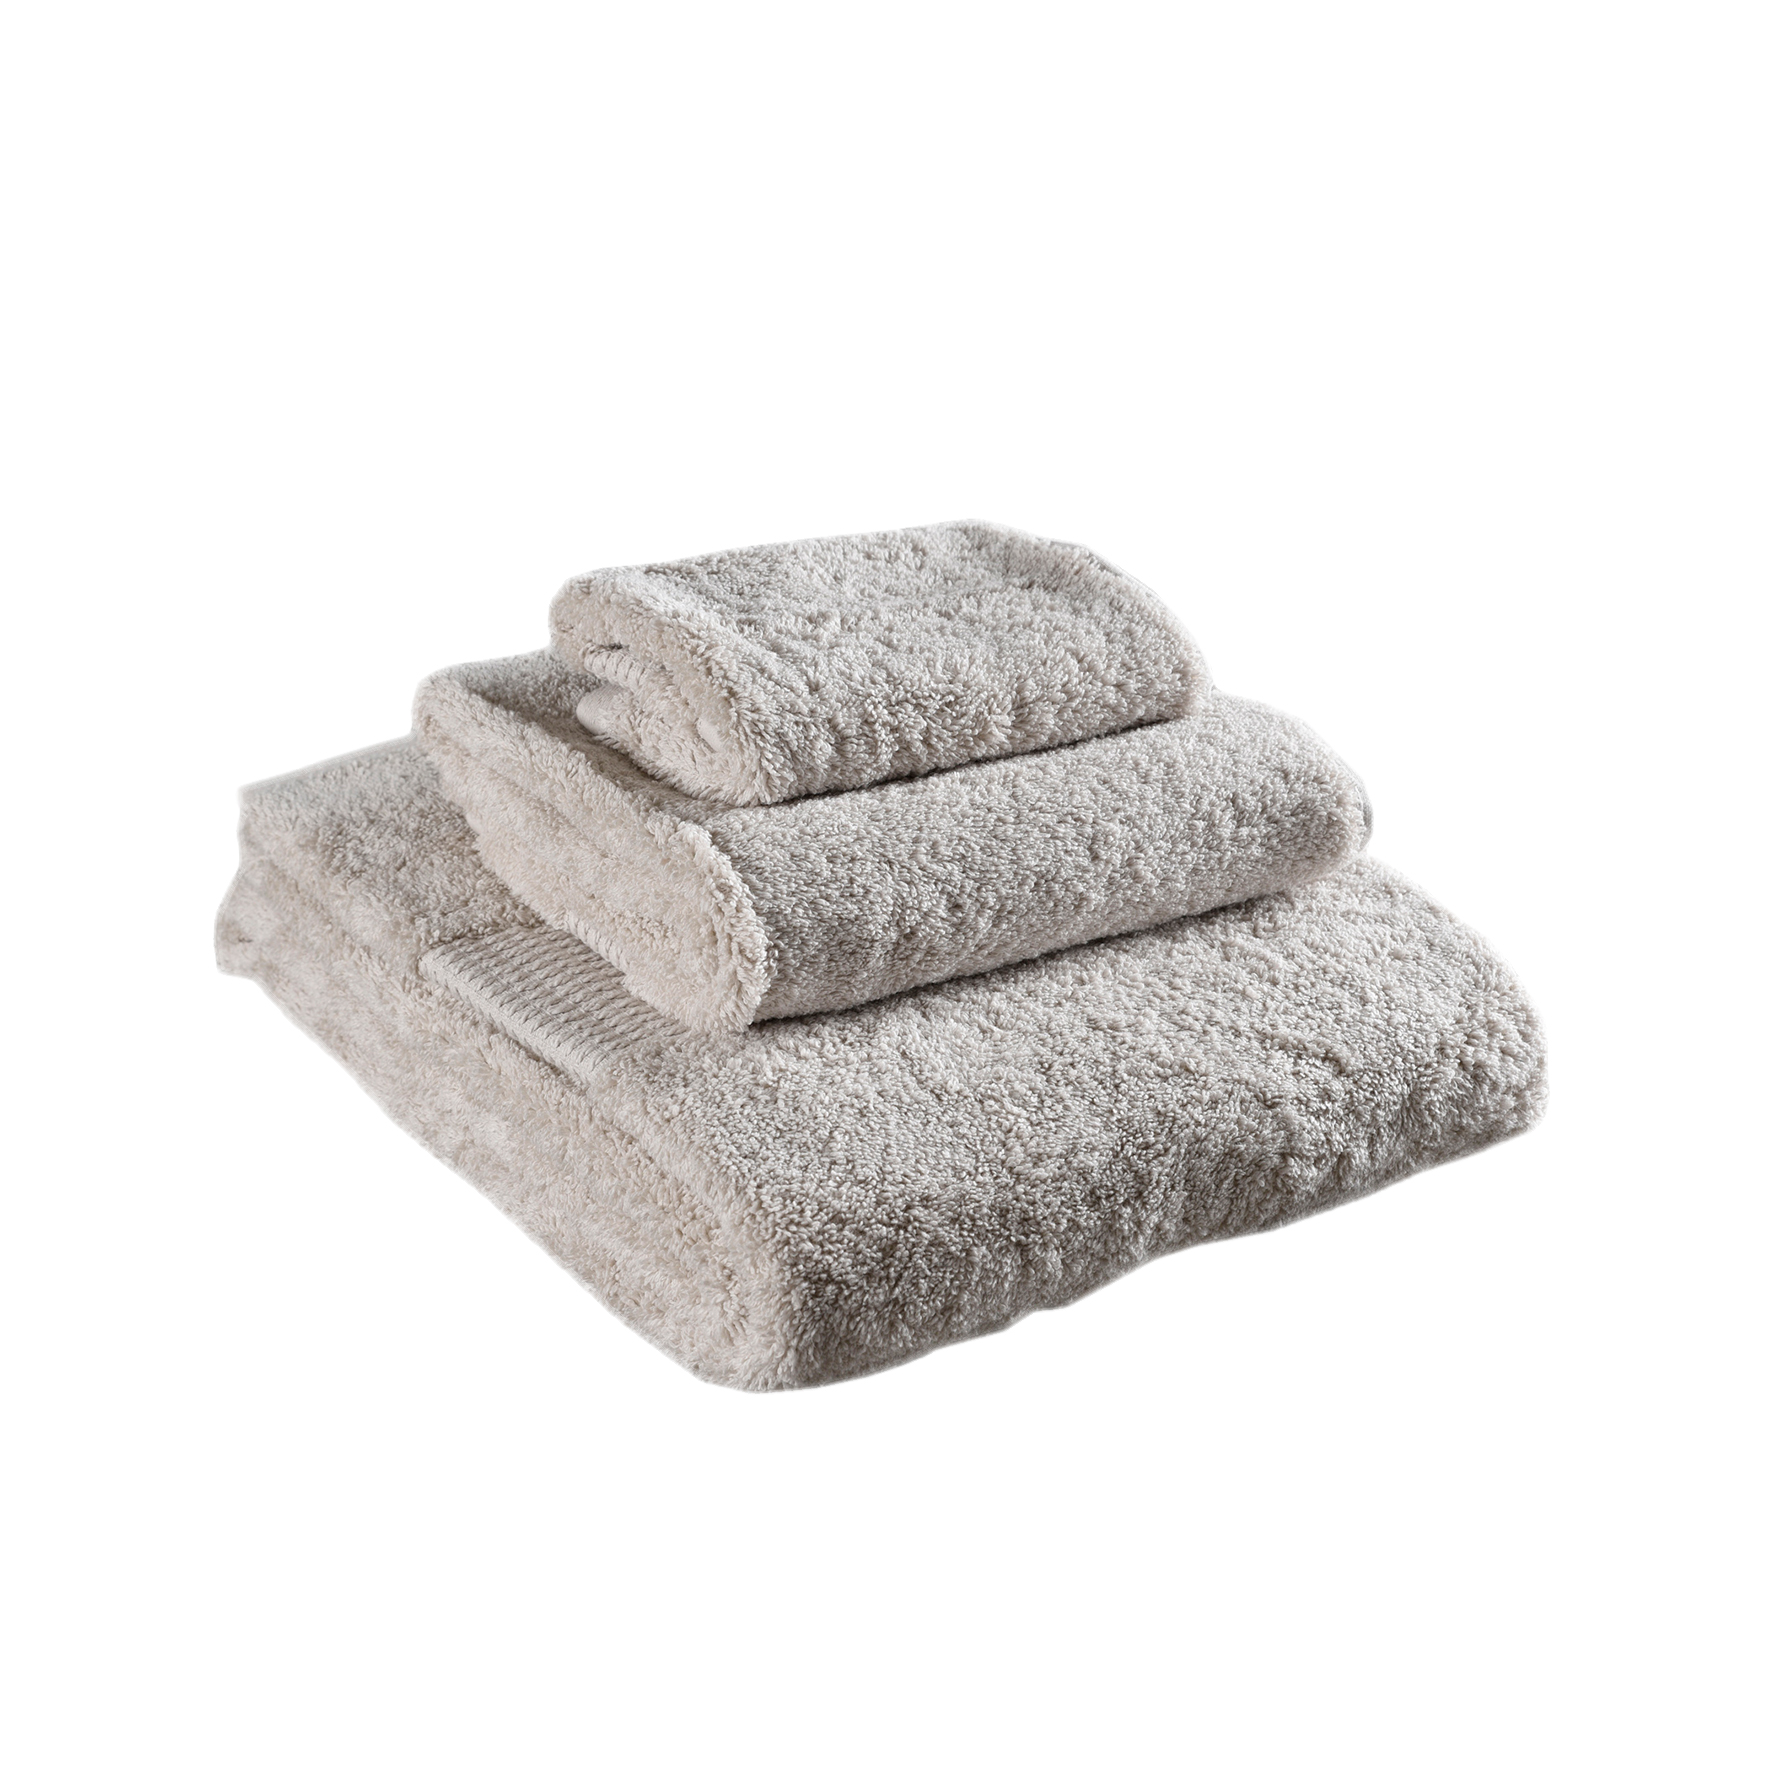 Delilah Home DHT-100301 Natural Organic Cotton Towel Set - 3-piece